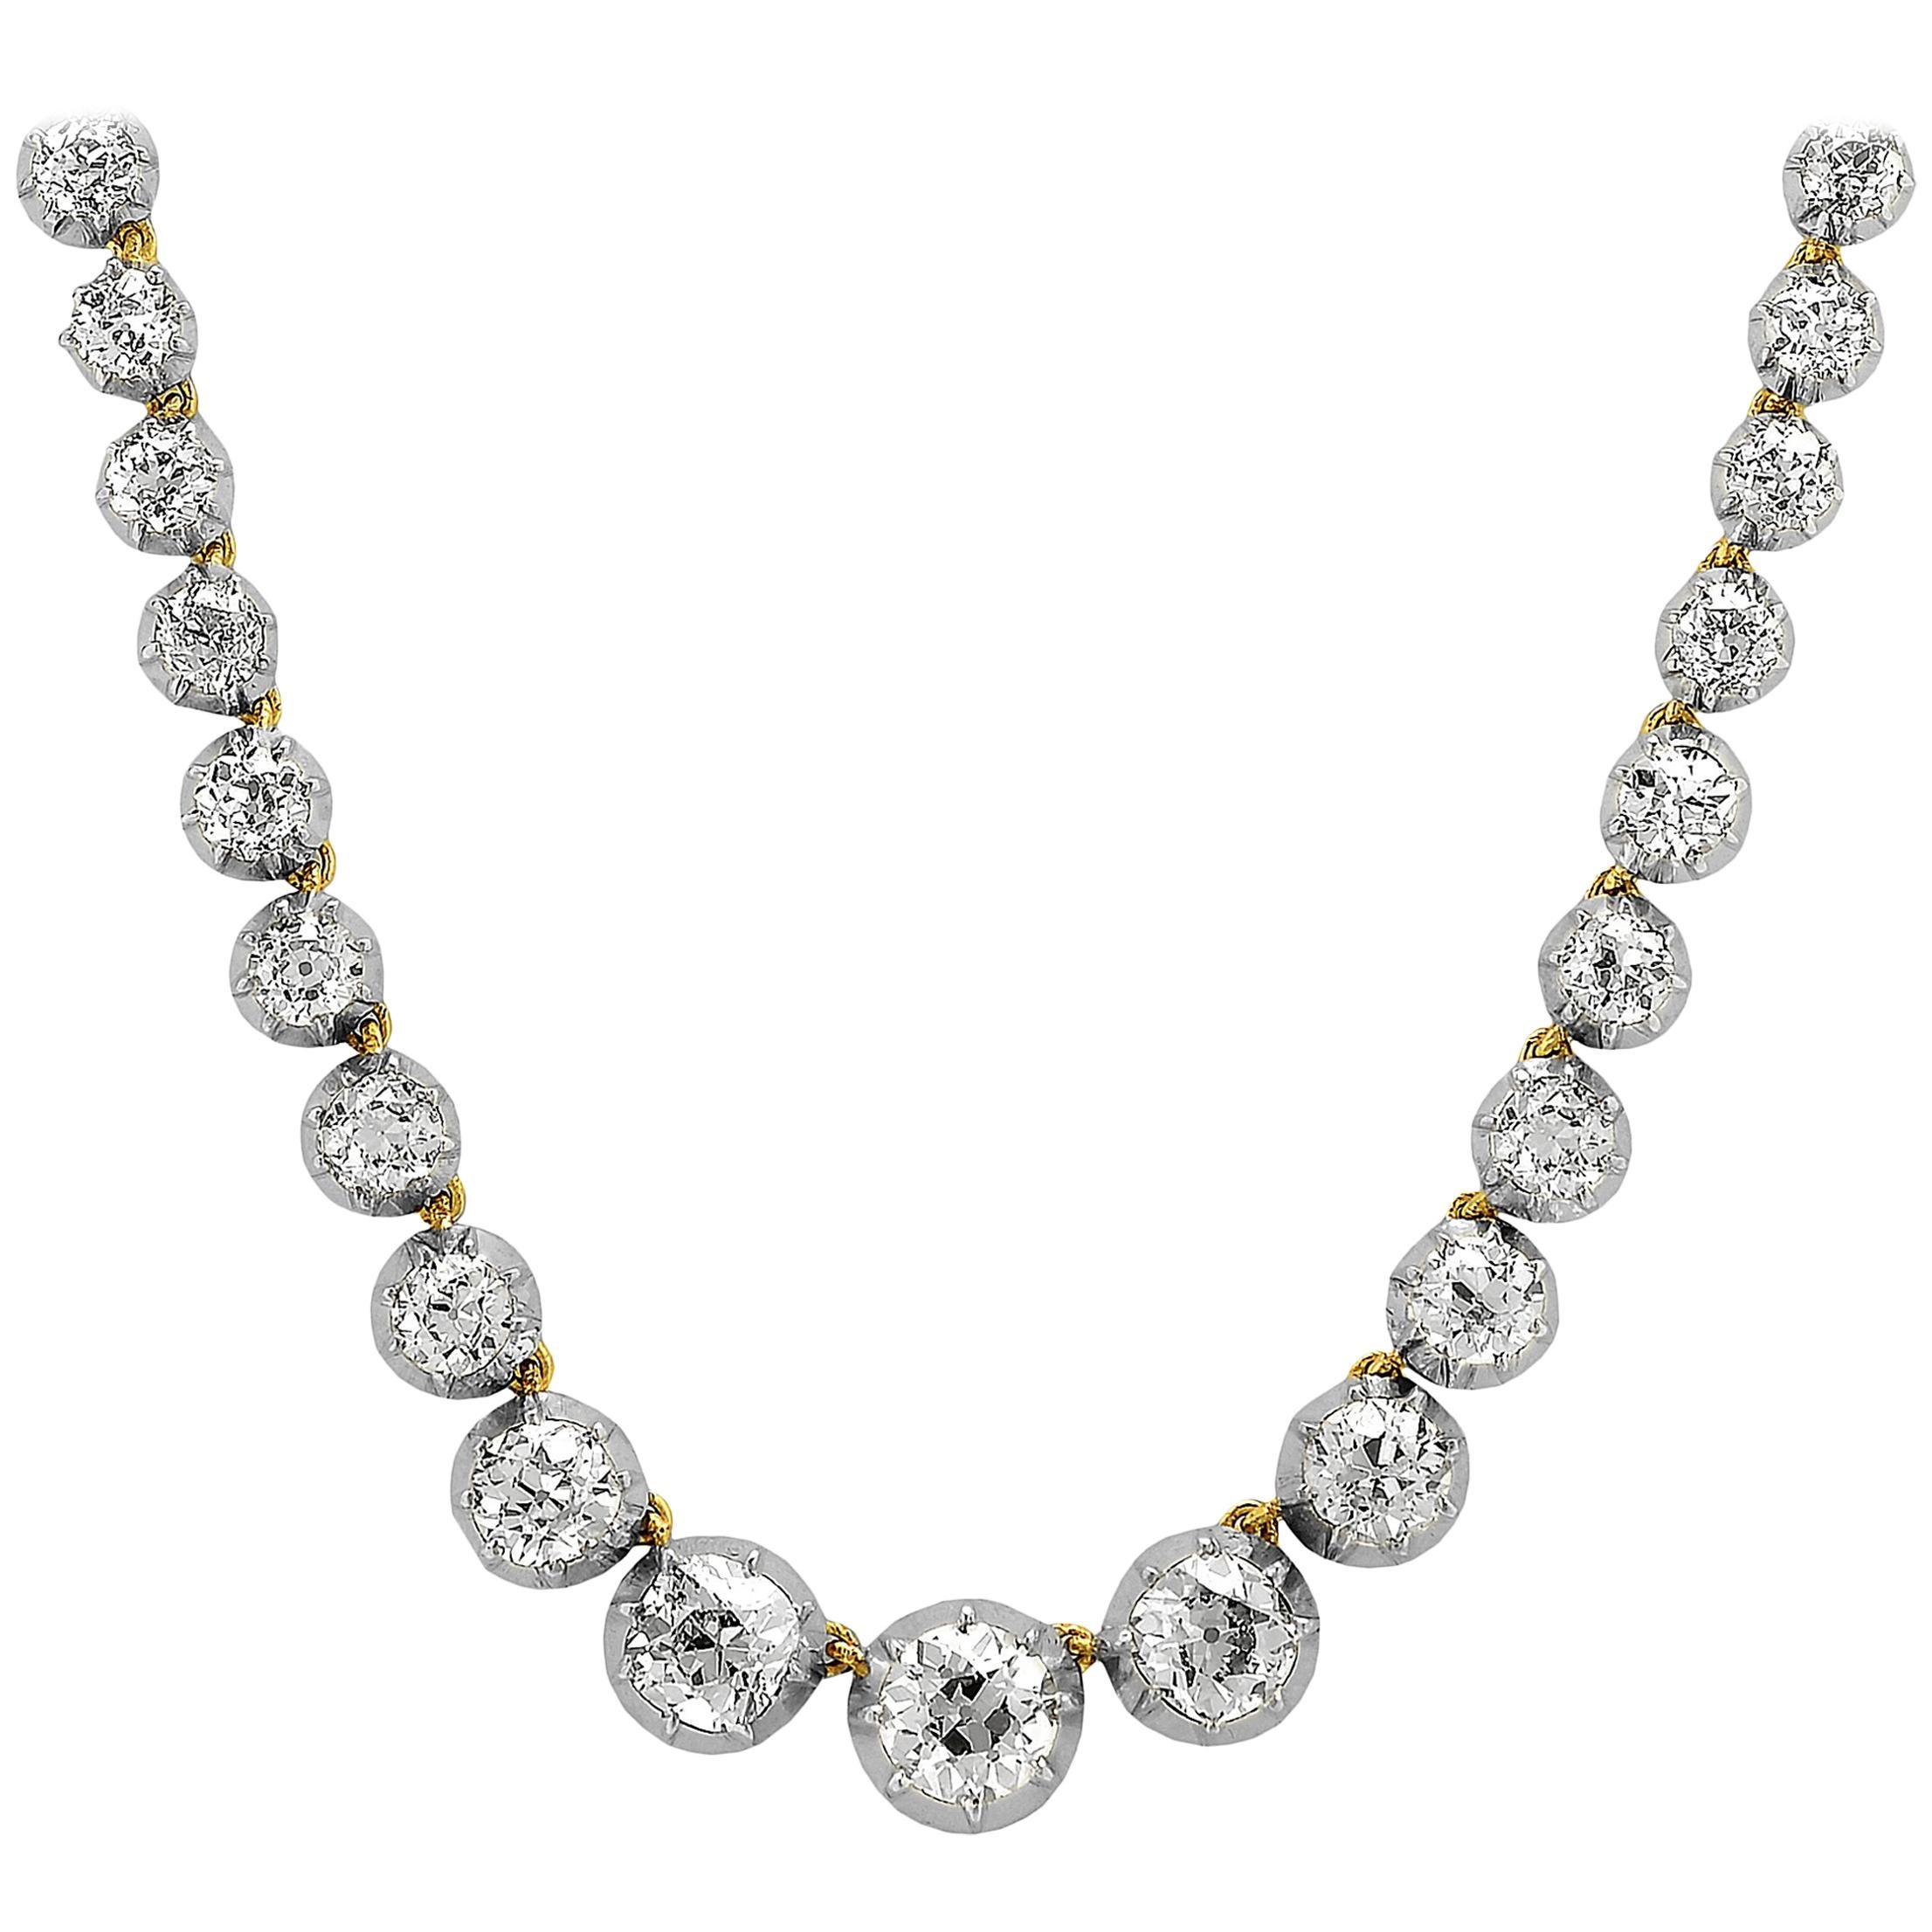 Antique Victorian Riviere, Single Strand Old European Cut Diamond Necklace/Tiara